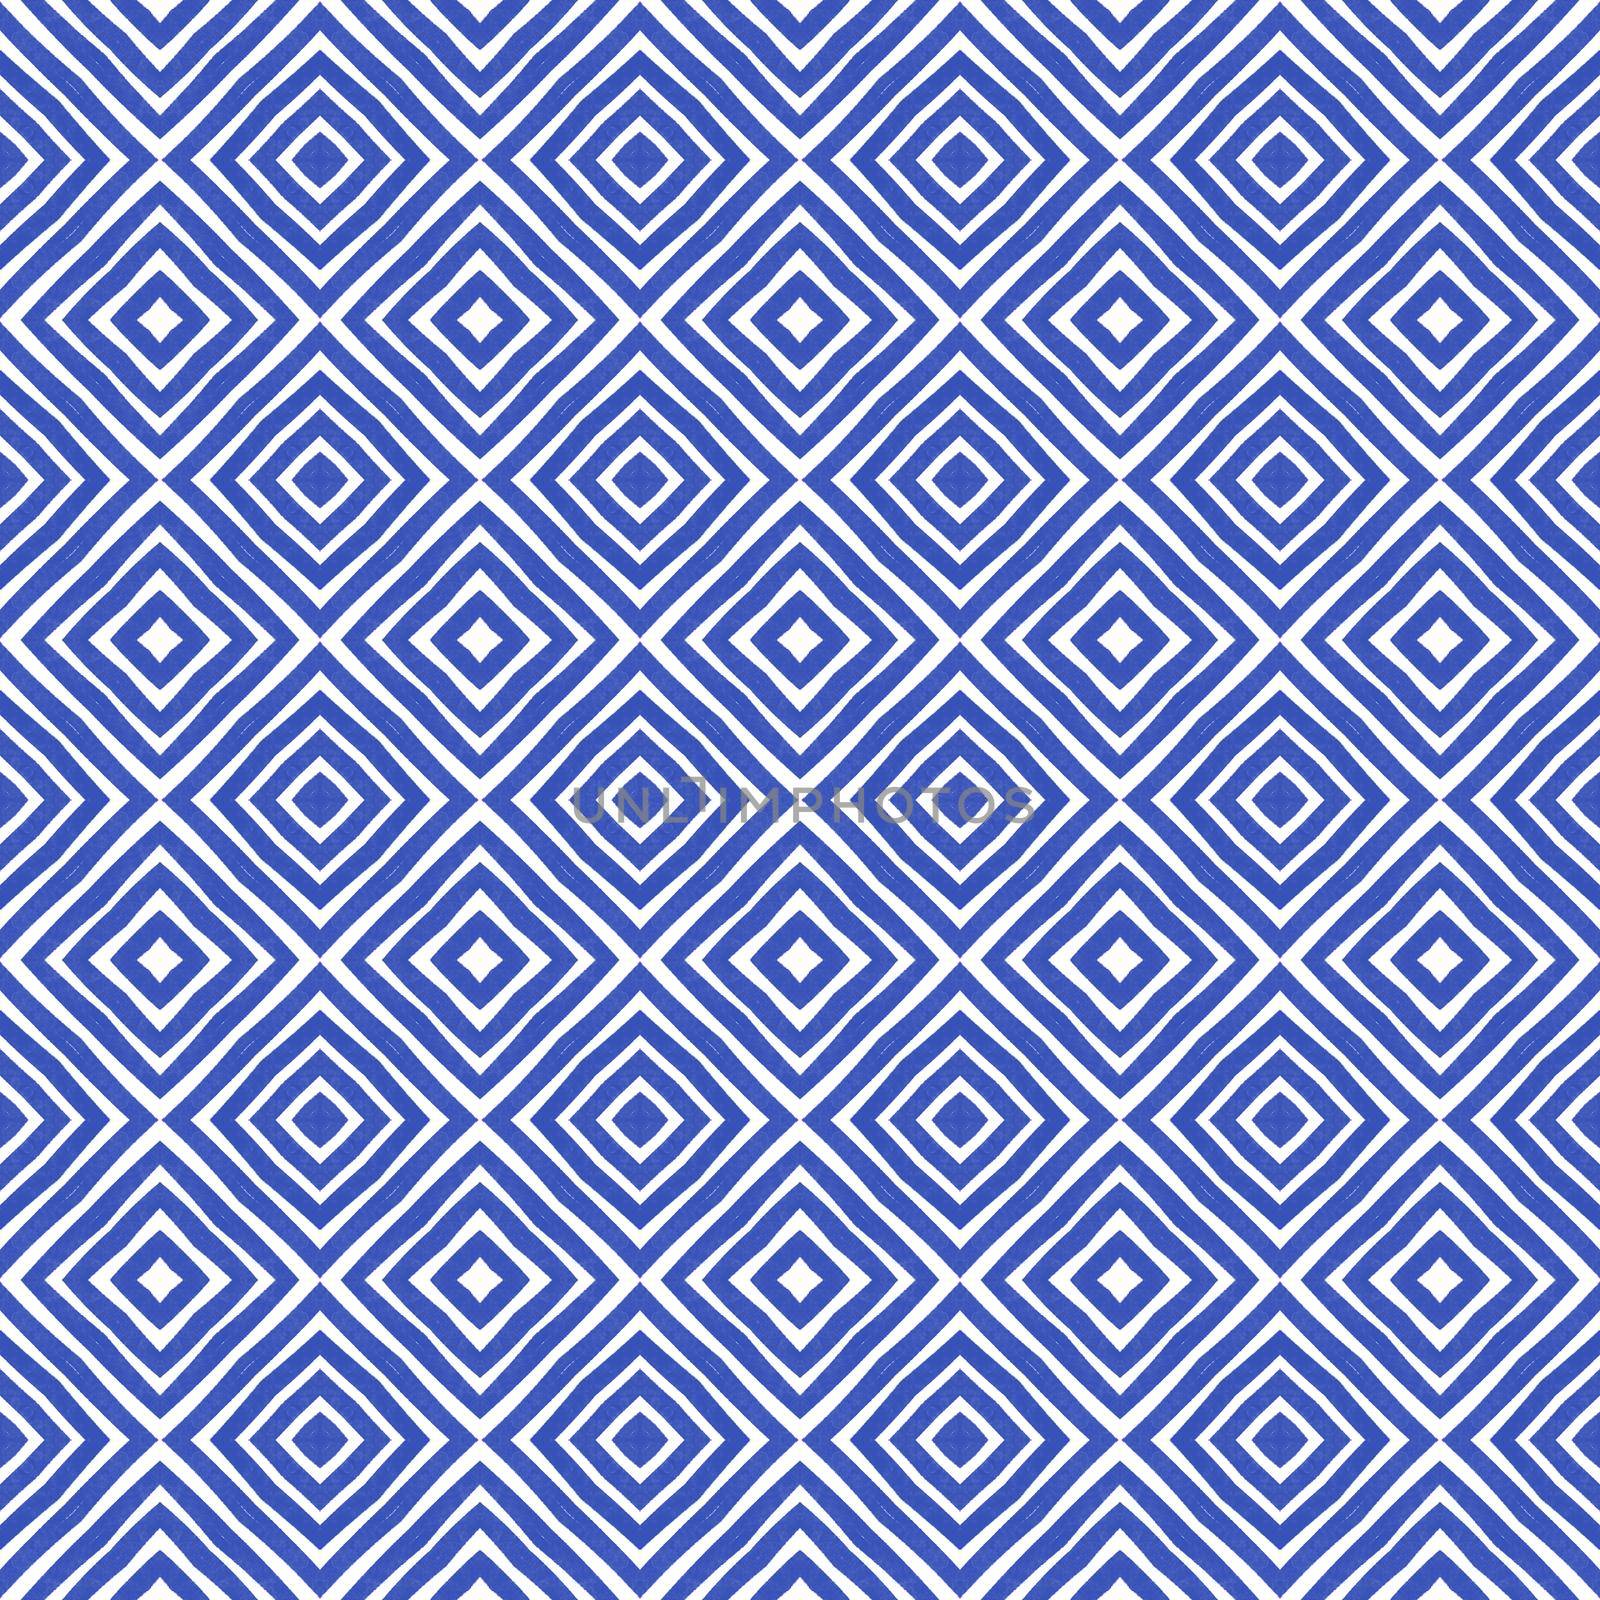 Mosaic seamless pattern. Indigo symmetrical by beginagain